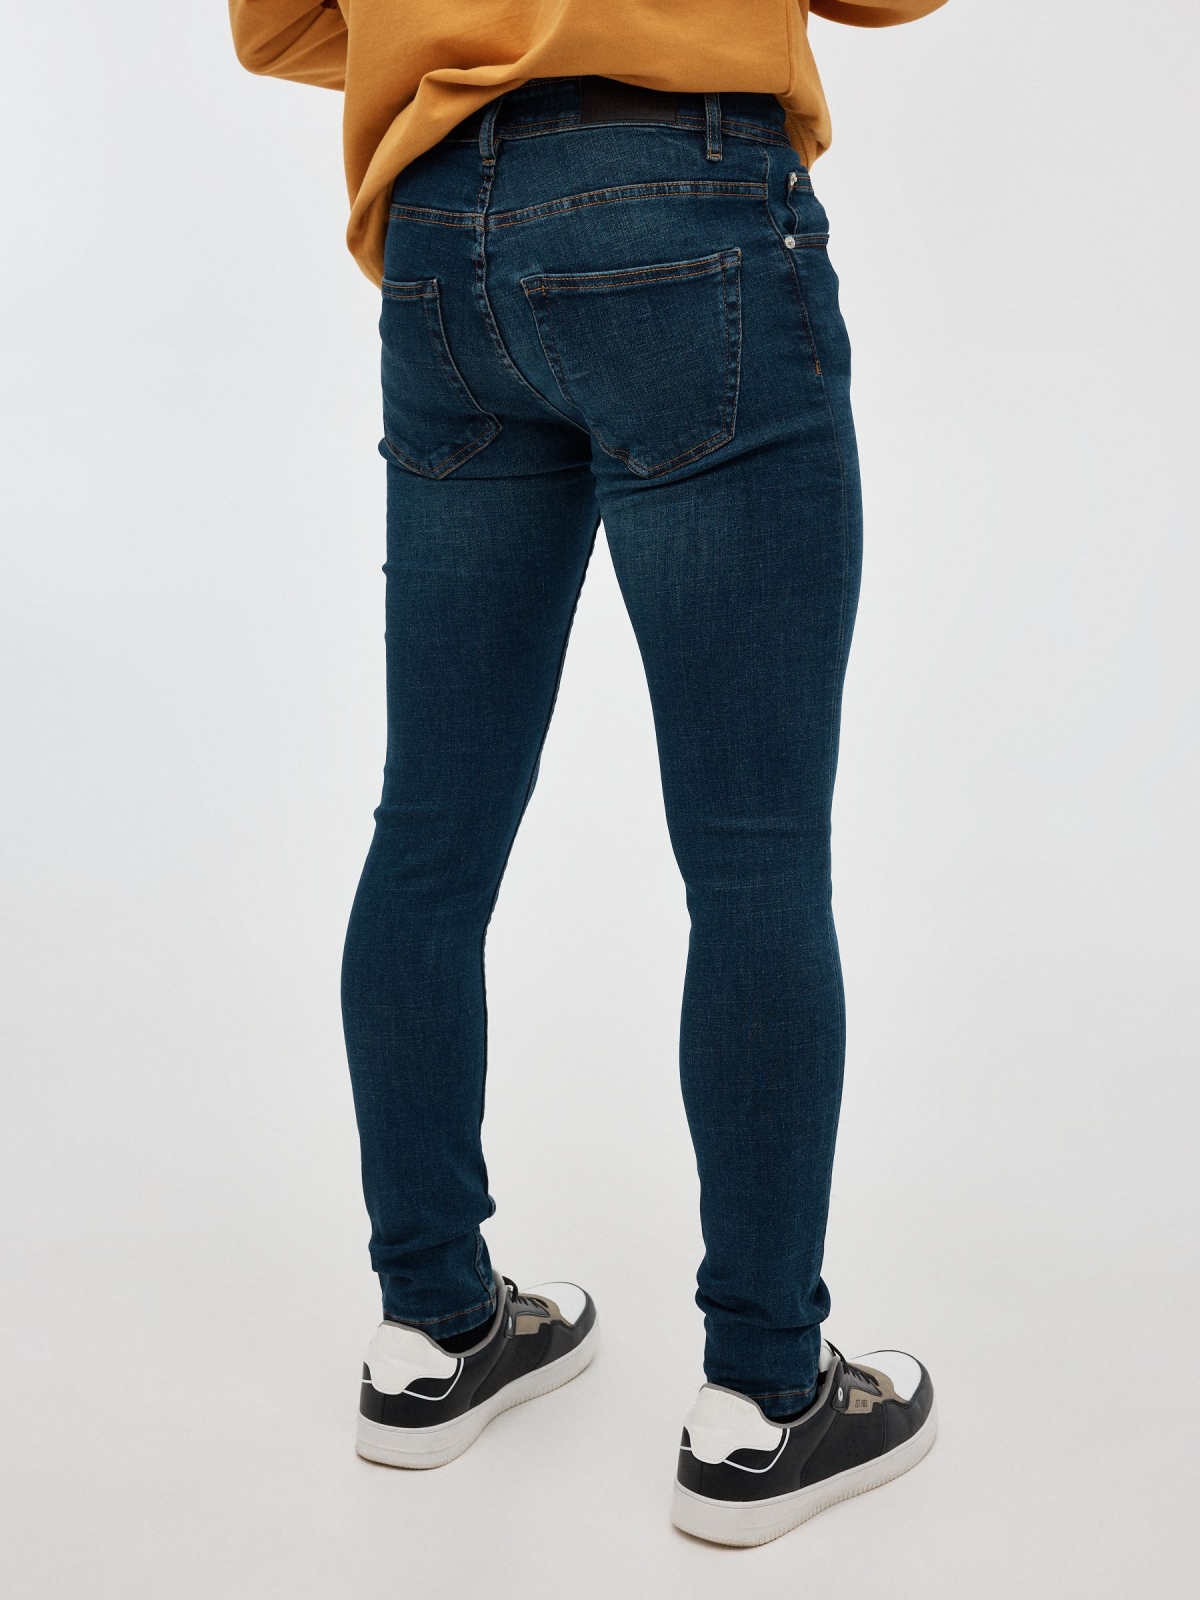 Jeans skinny azul oscuro azul vista media trasera